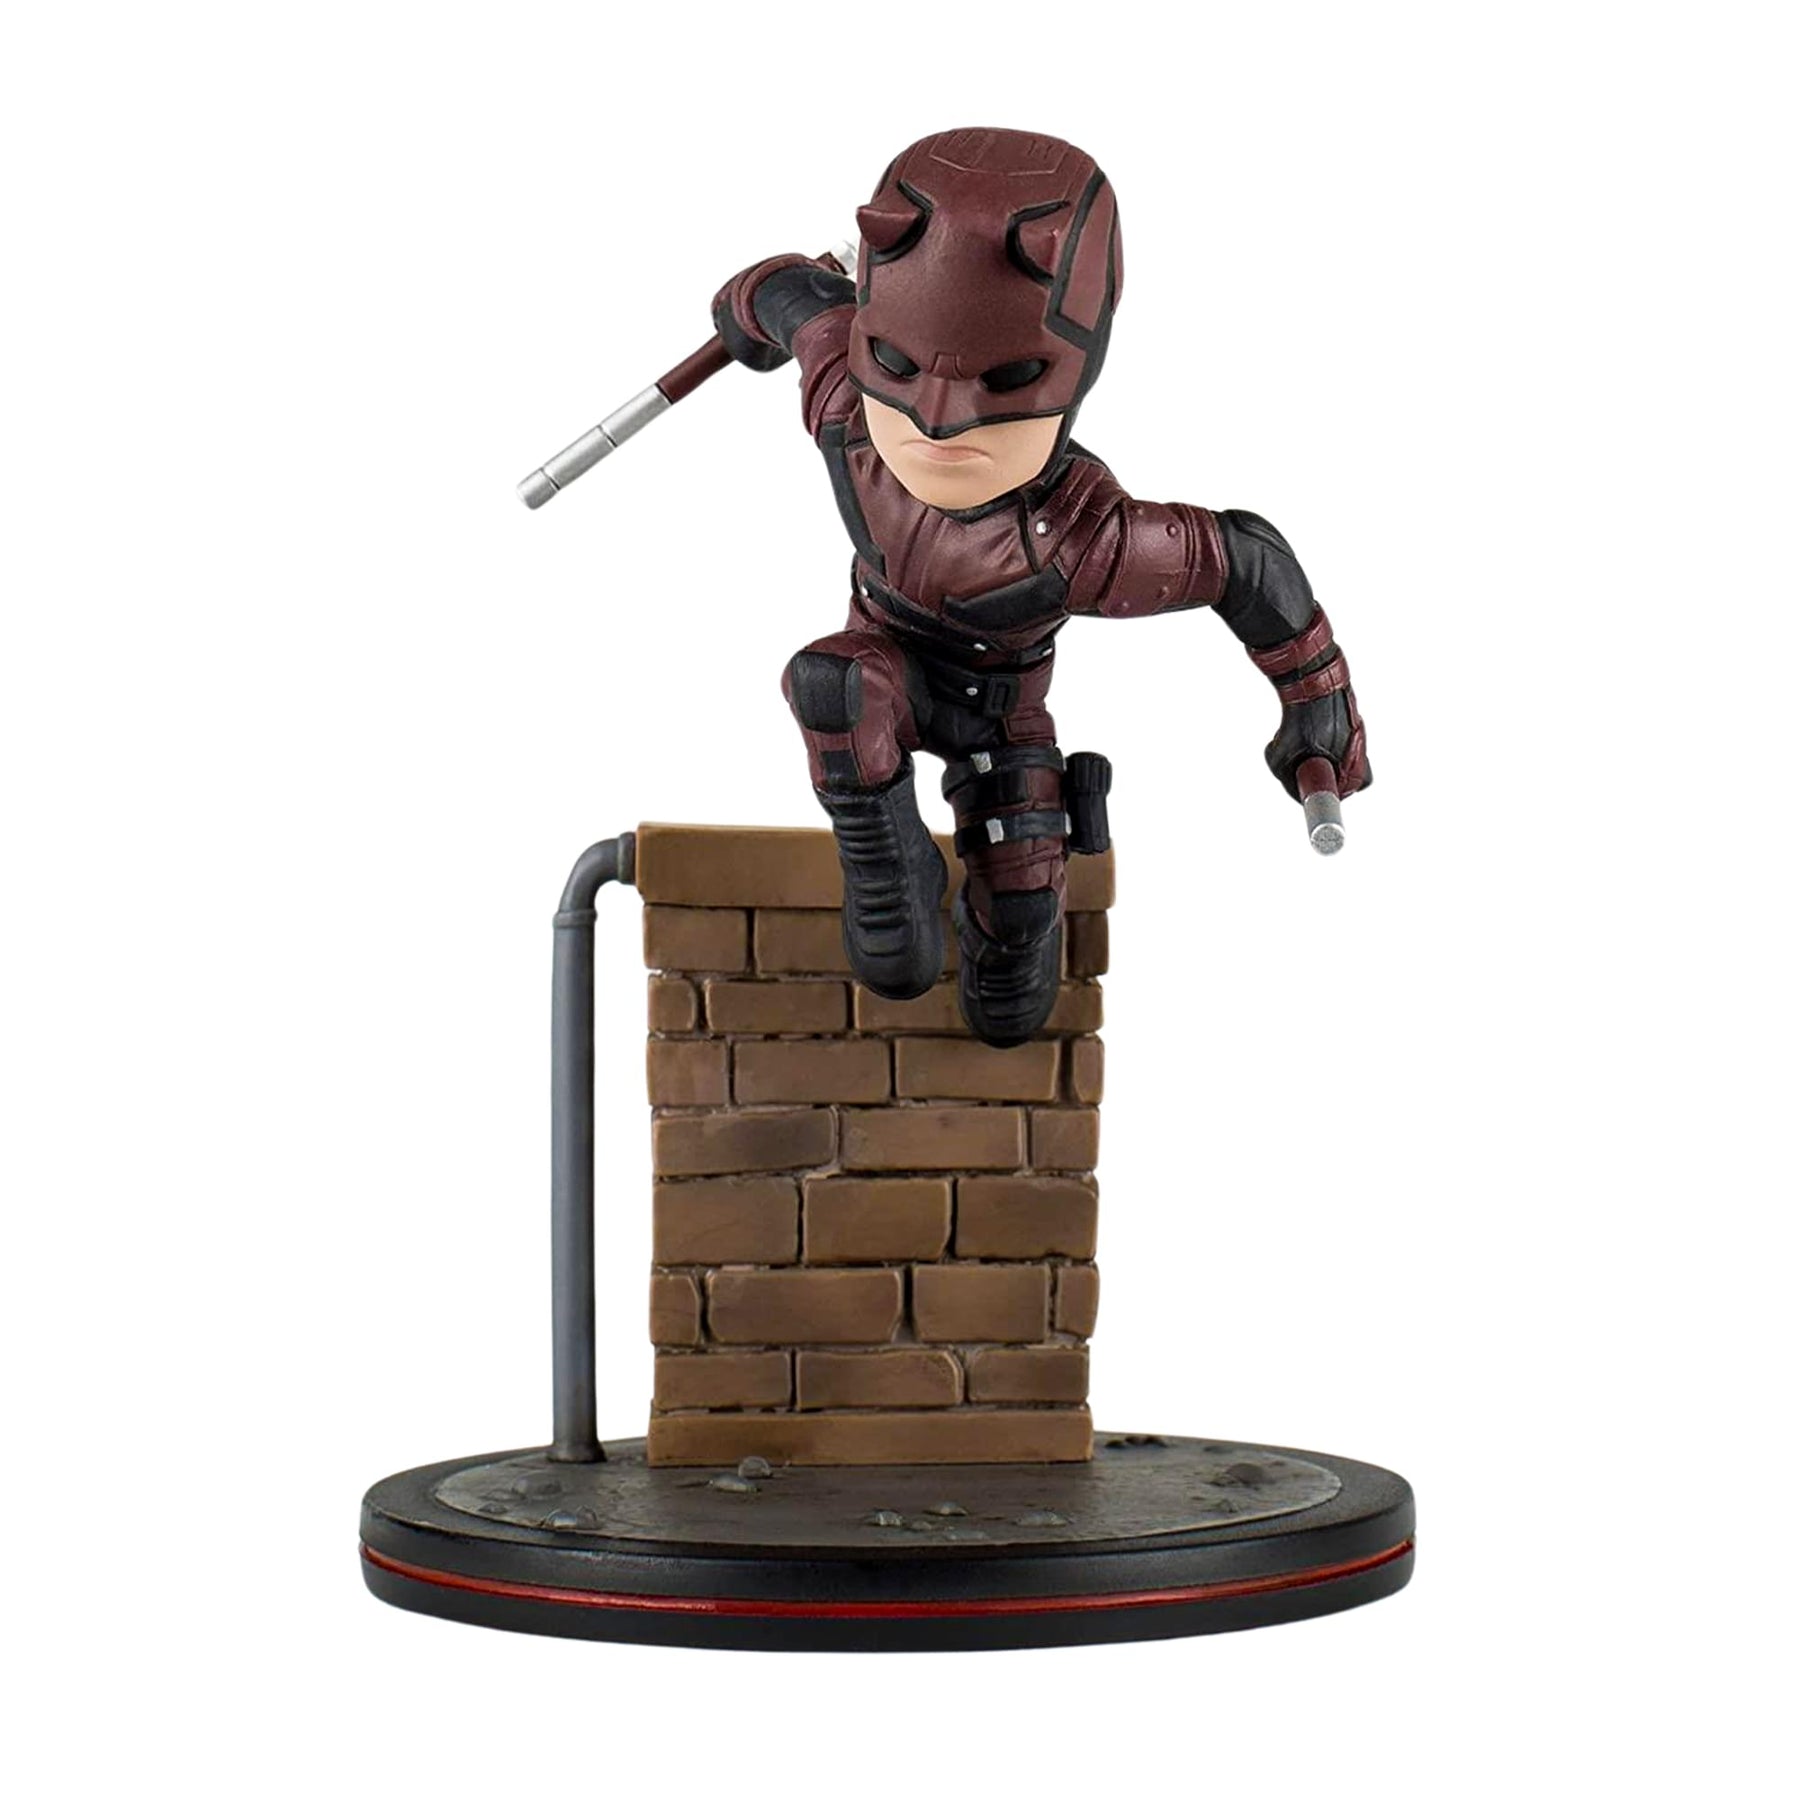 Marvel Daredevil Q-Fig Diorama